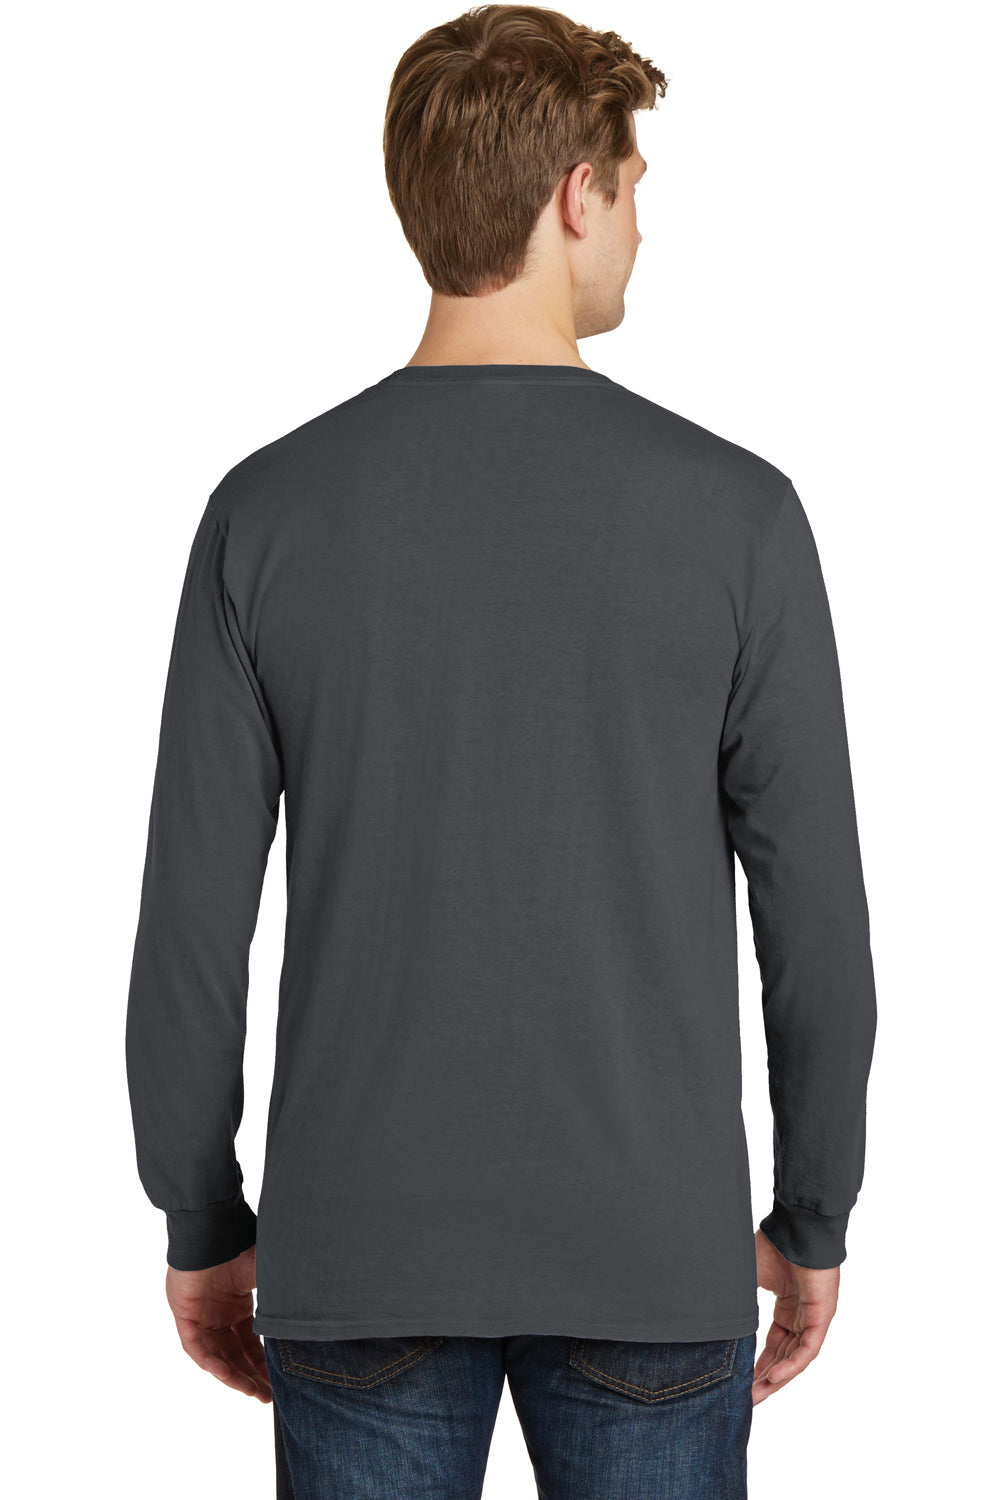 Port & Company PC099LSP Mens Beach Wash Long Sleeve Crewneck T-Shirt w/ Pocket Coal Grey Back